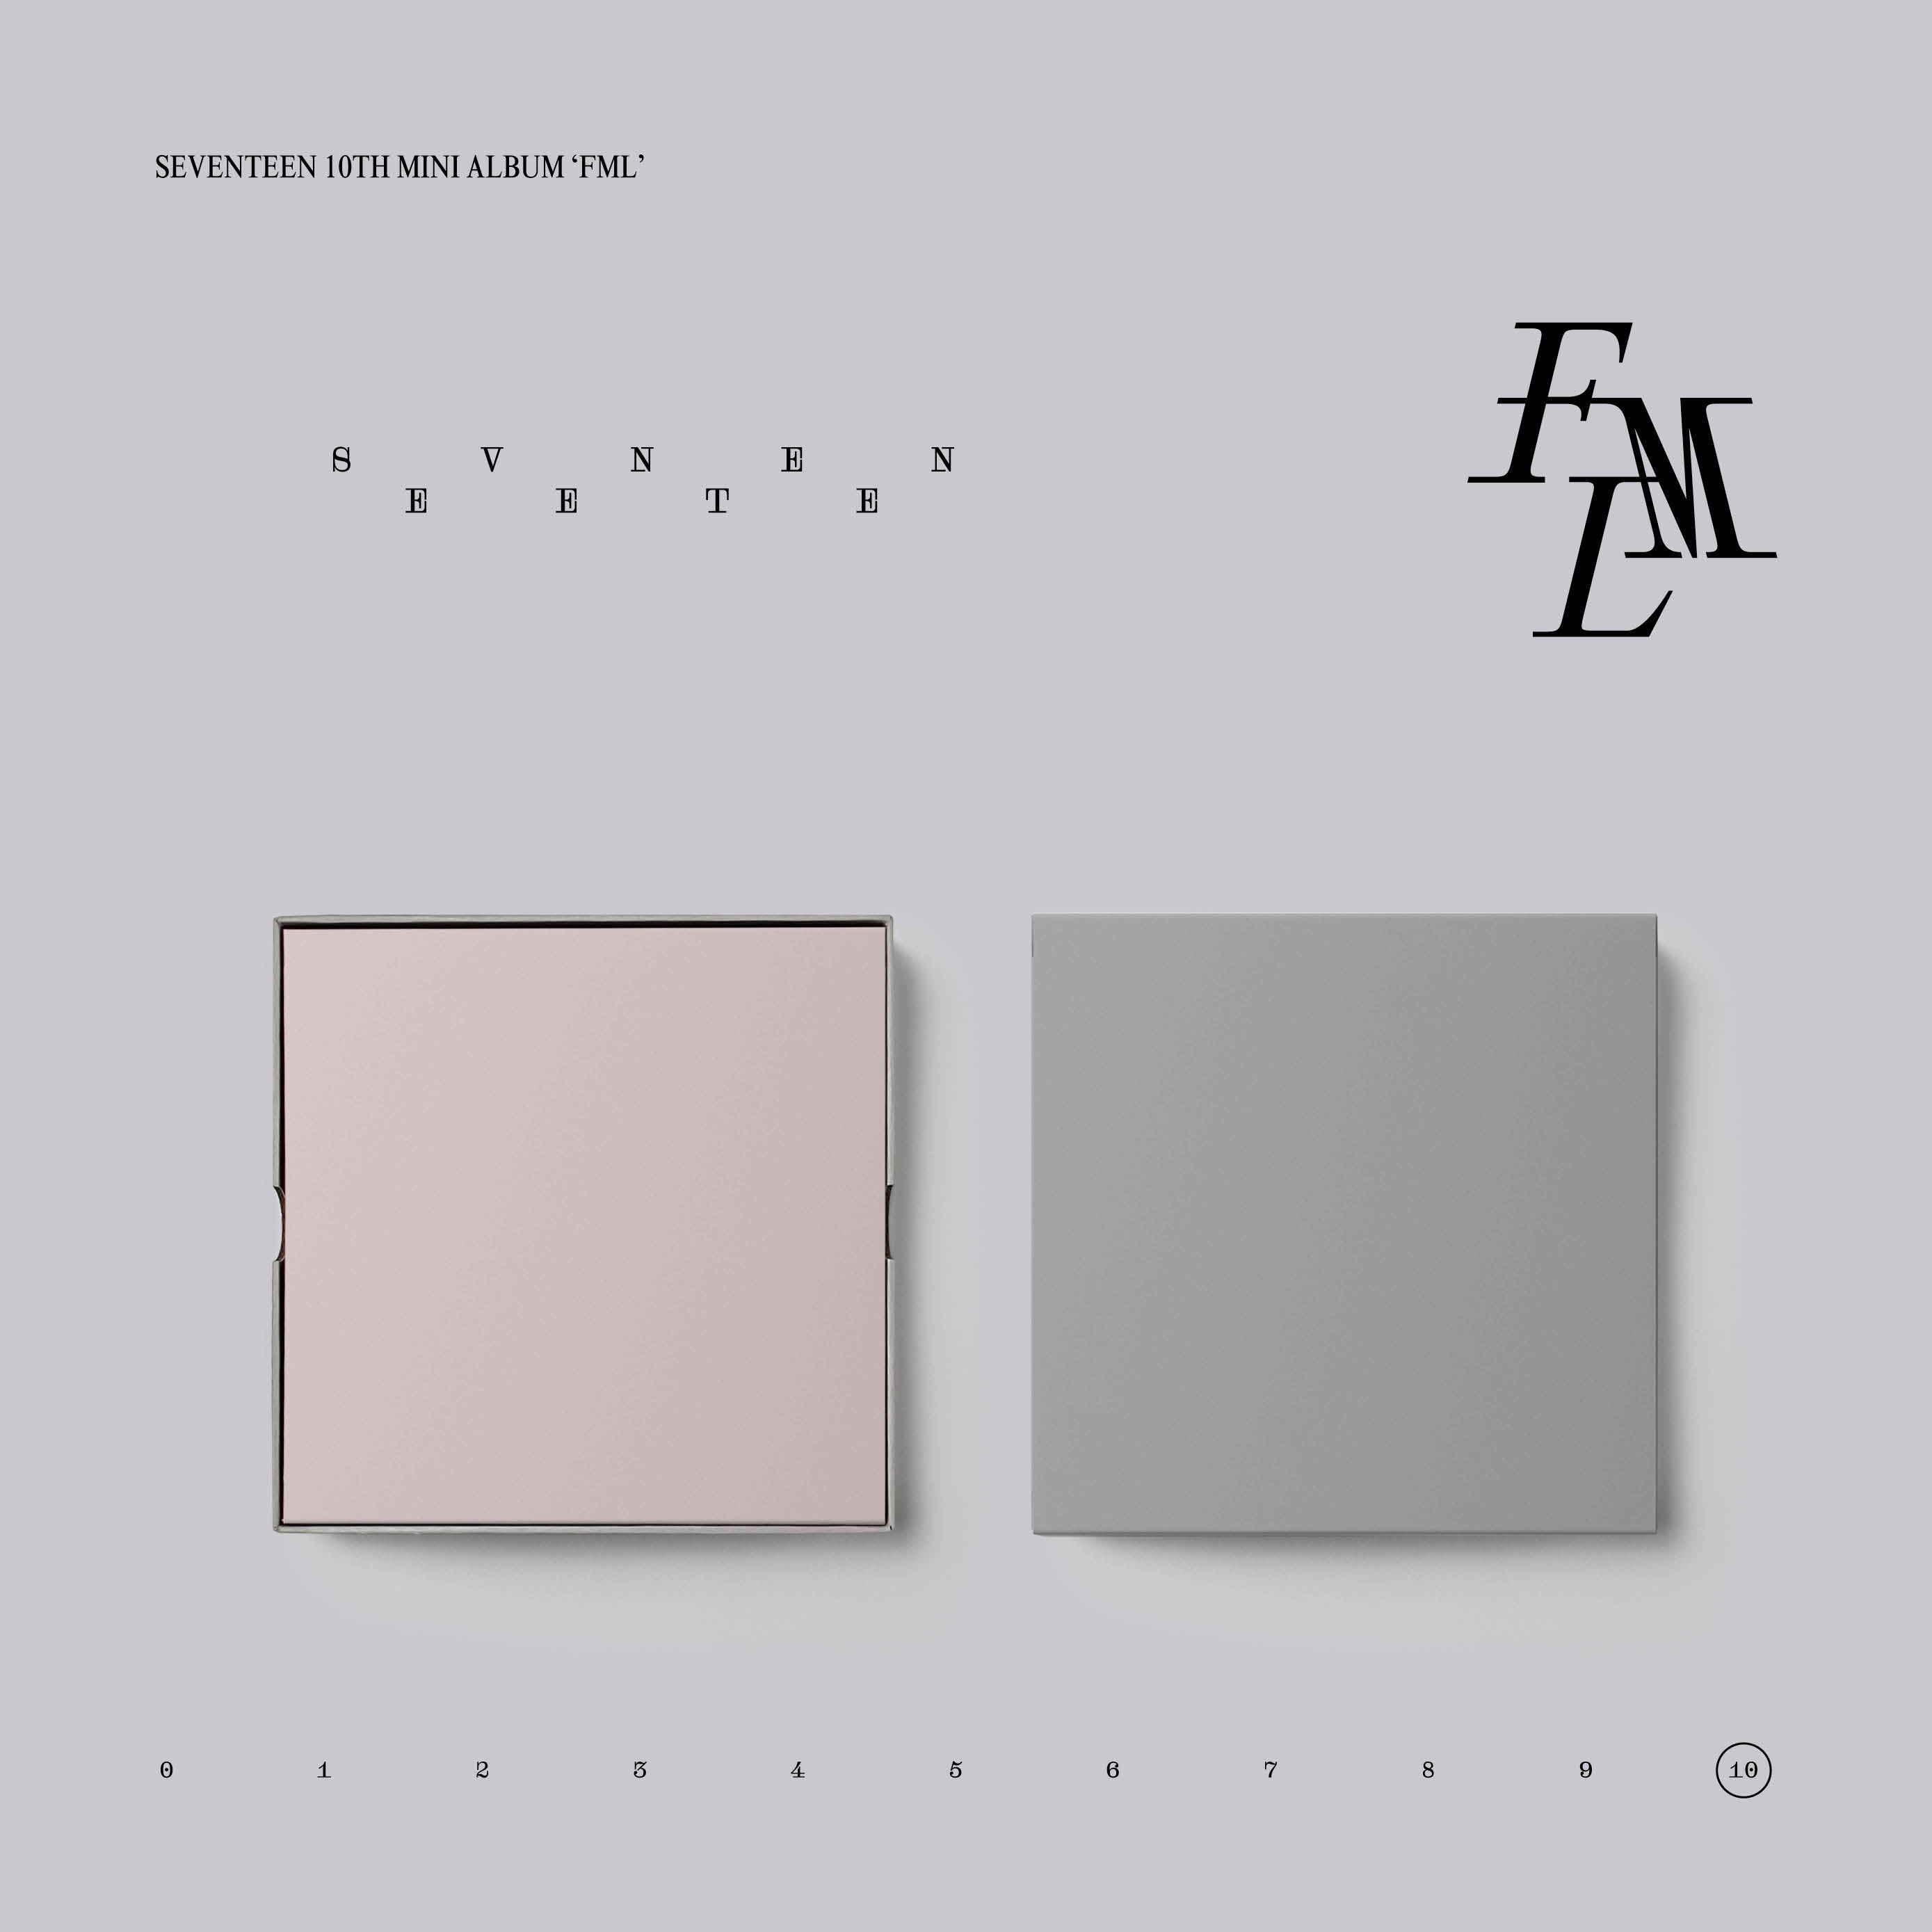 [拆卡专 无特典] SEVENTEEN - 10th Mini Album [FML] (CARAT Ver.)_KindredSpirit_JHHJ信箱